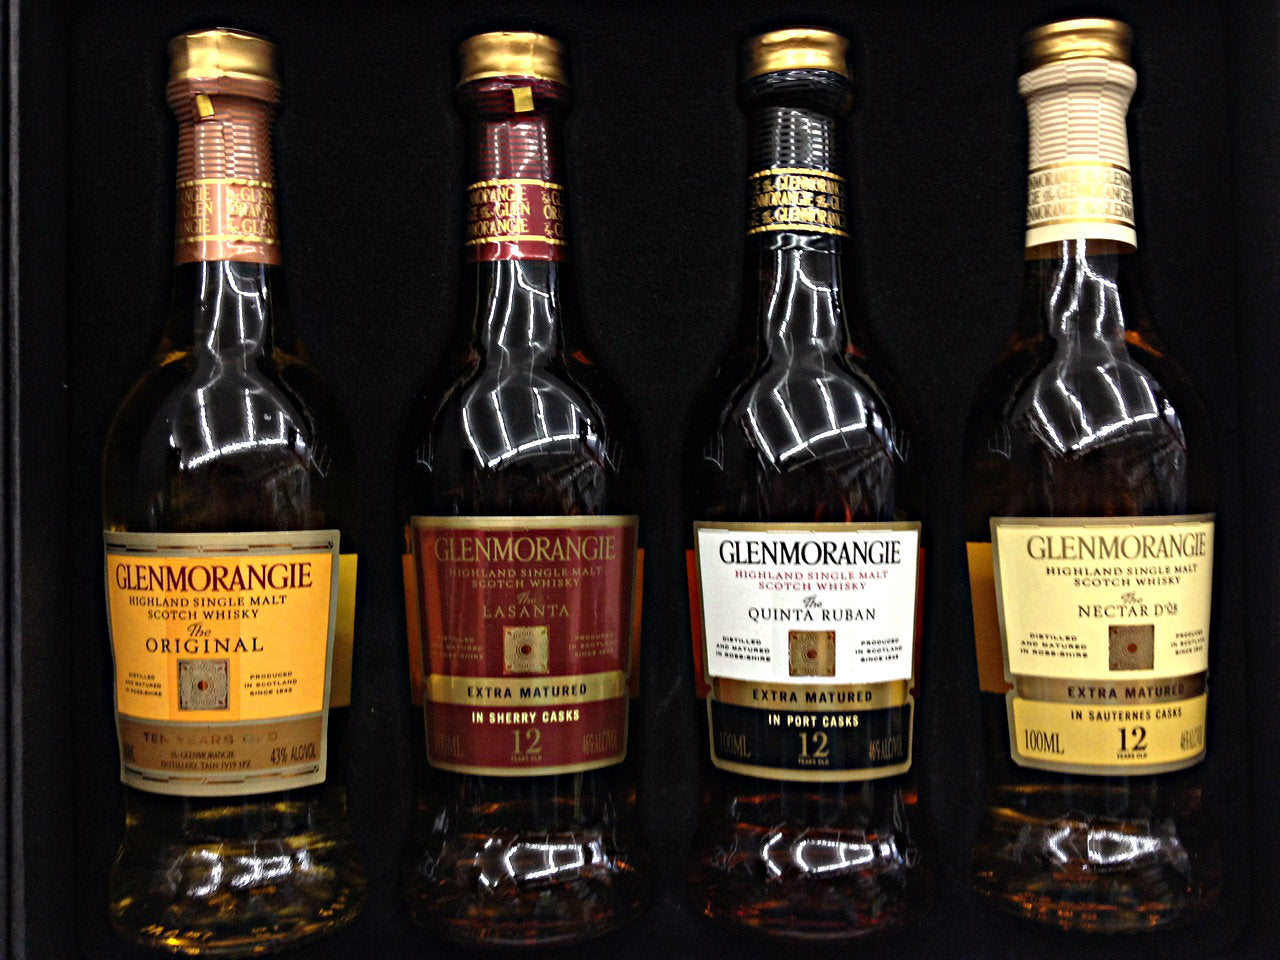 Glenmorangie Highland Single Malt Scotch Whisky - 100 ml, 4 pack